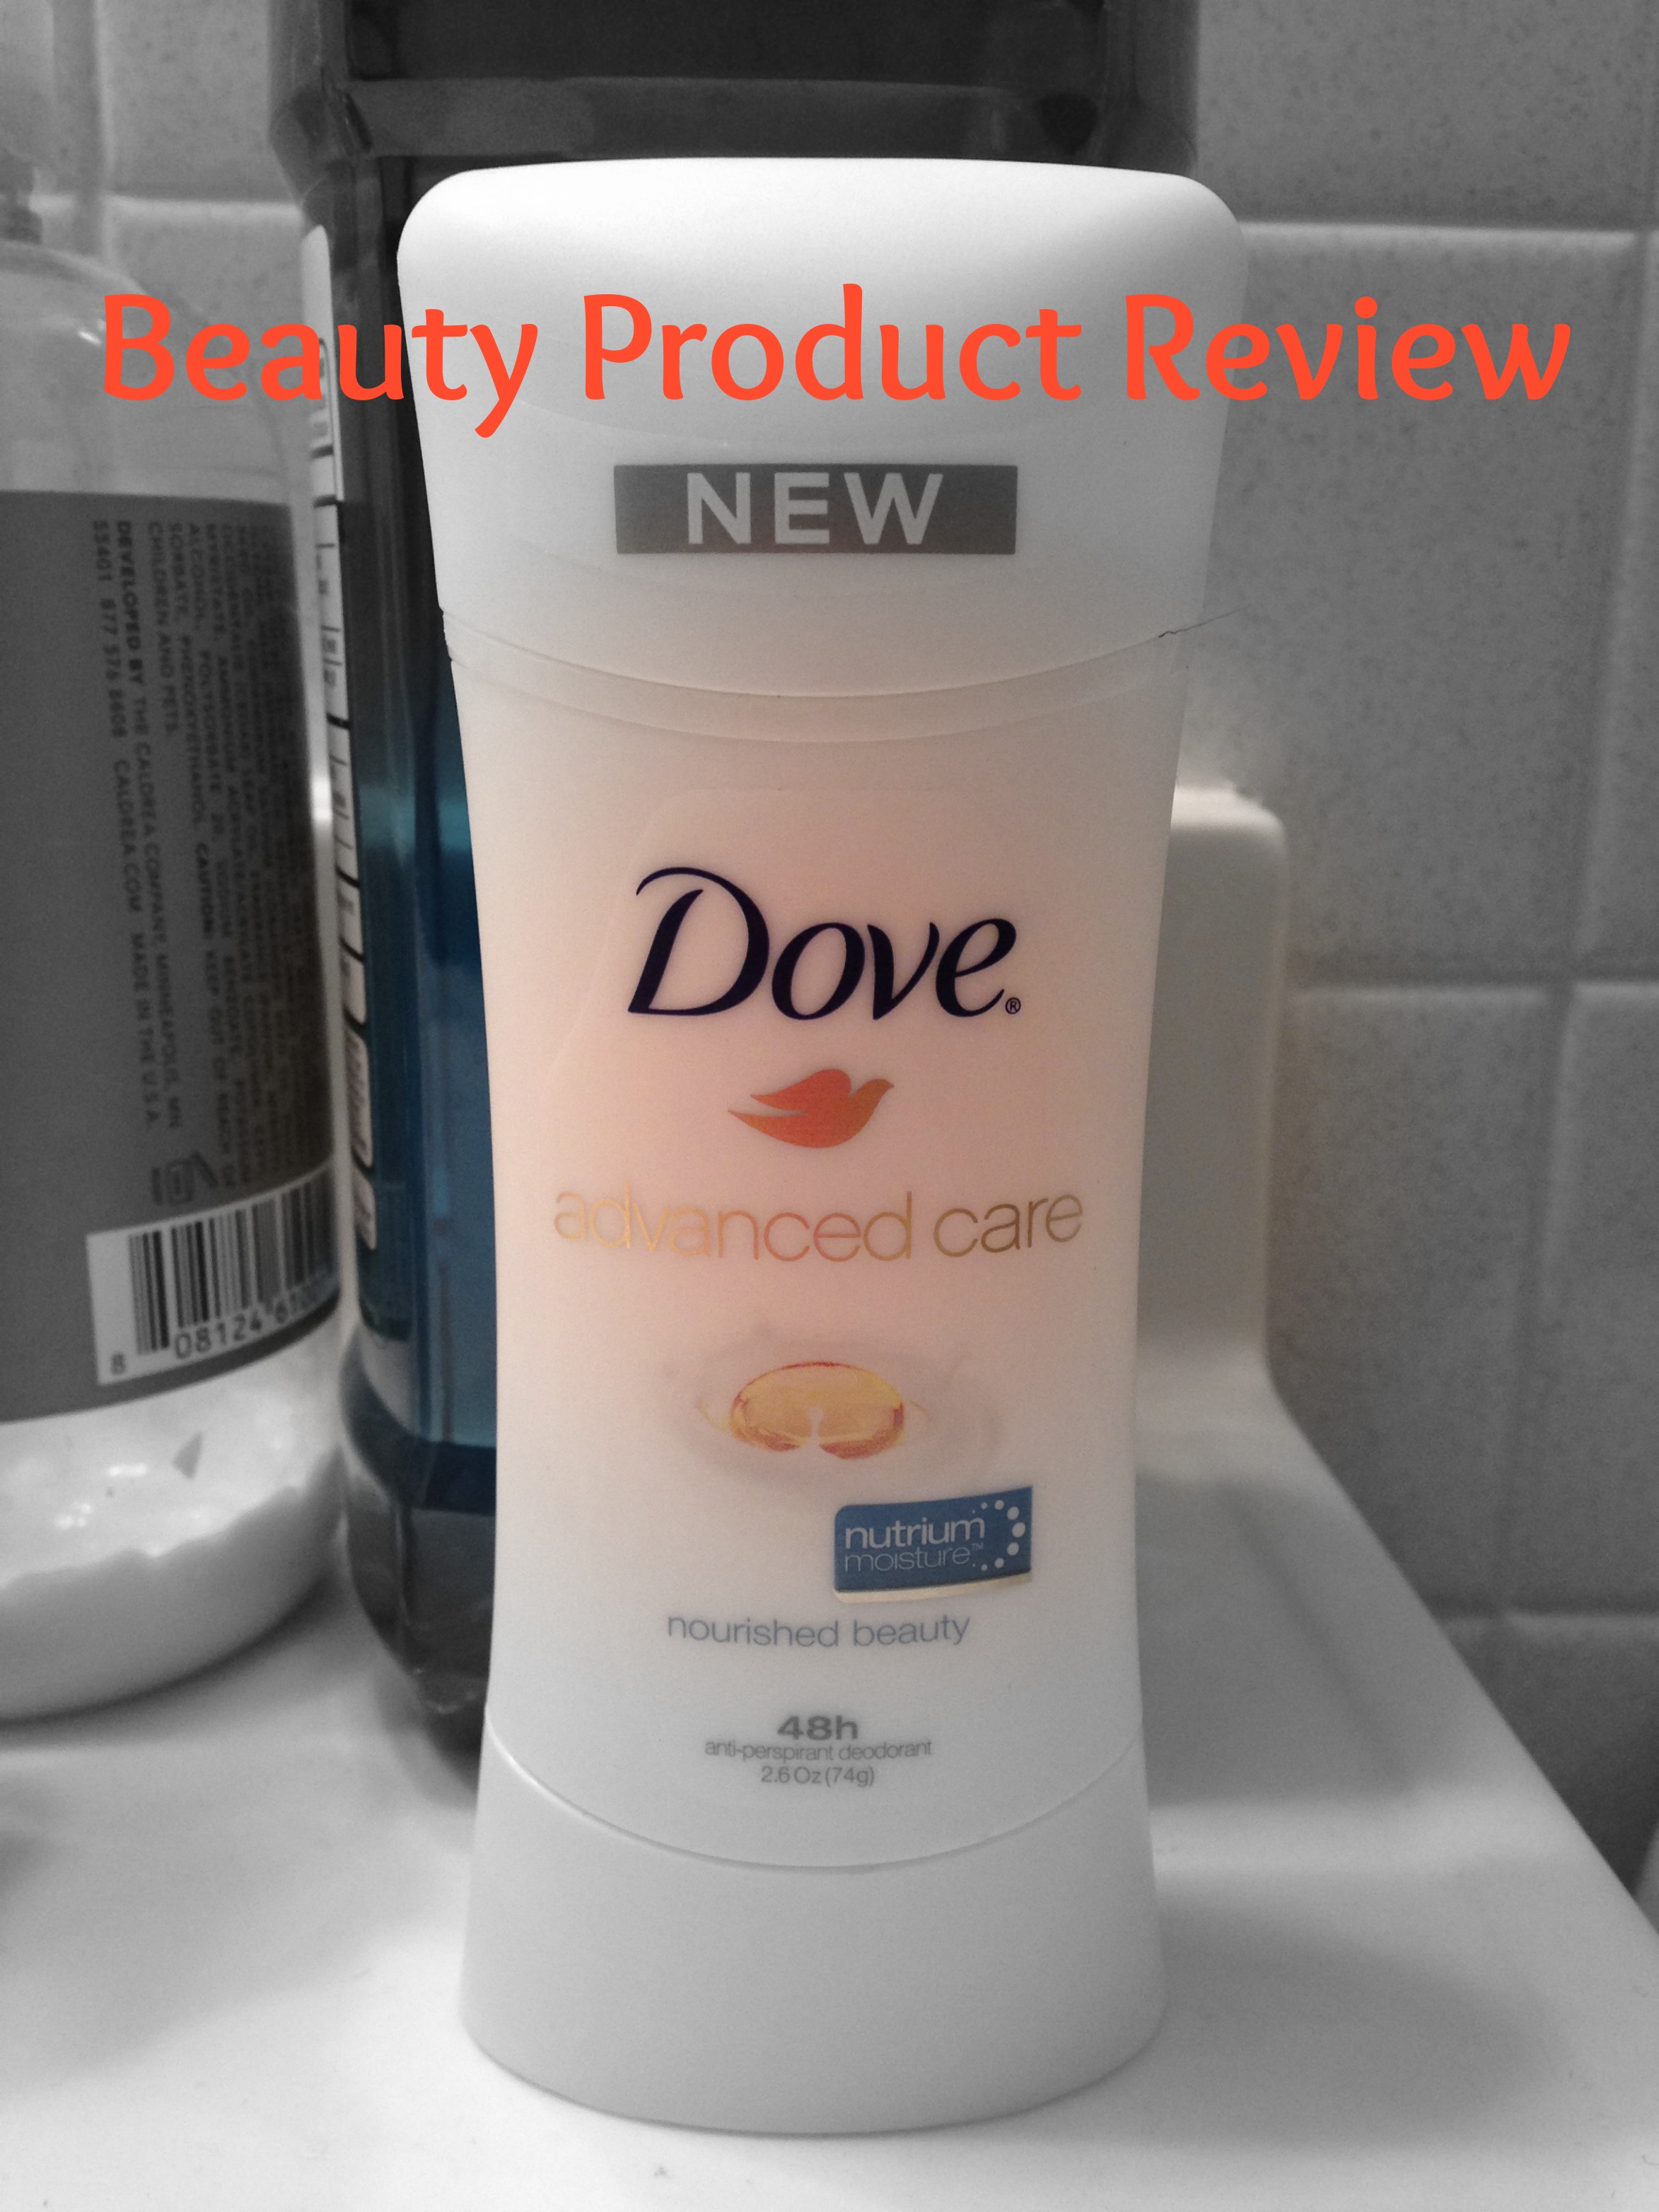 Dove Advanced Care Deodorant with Nutrium Moisture